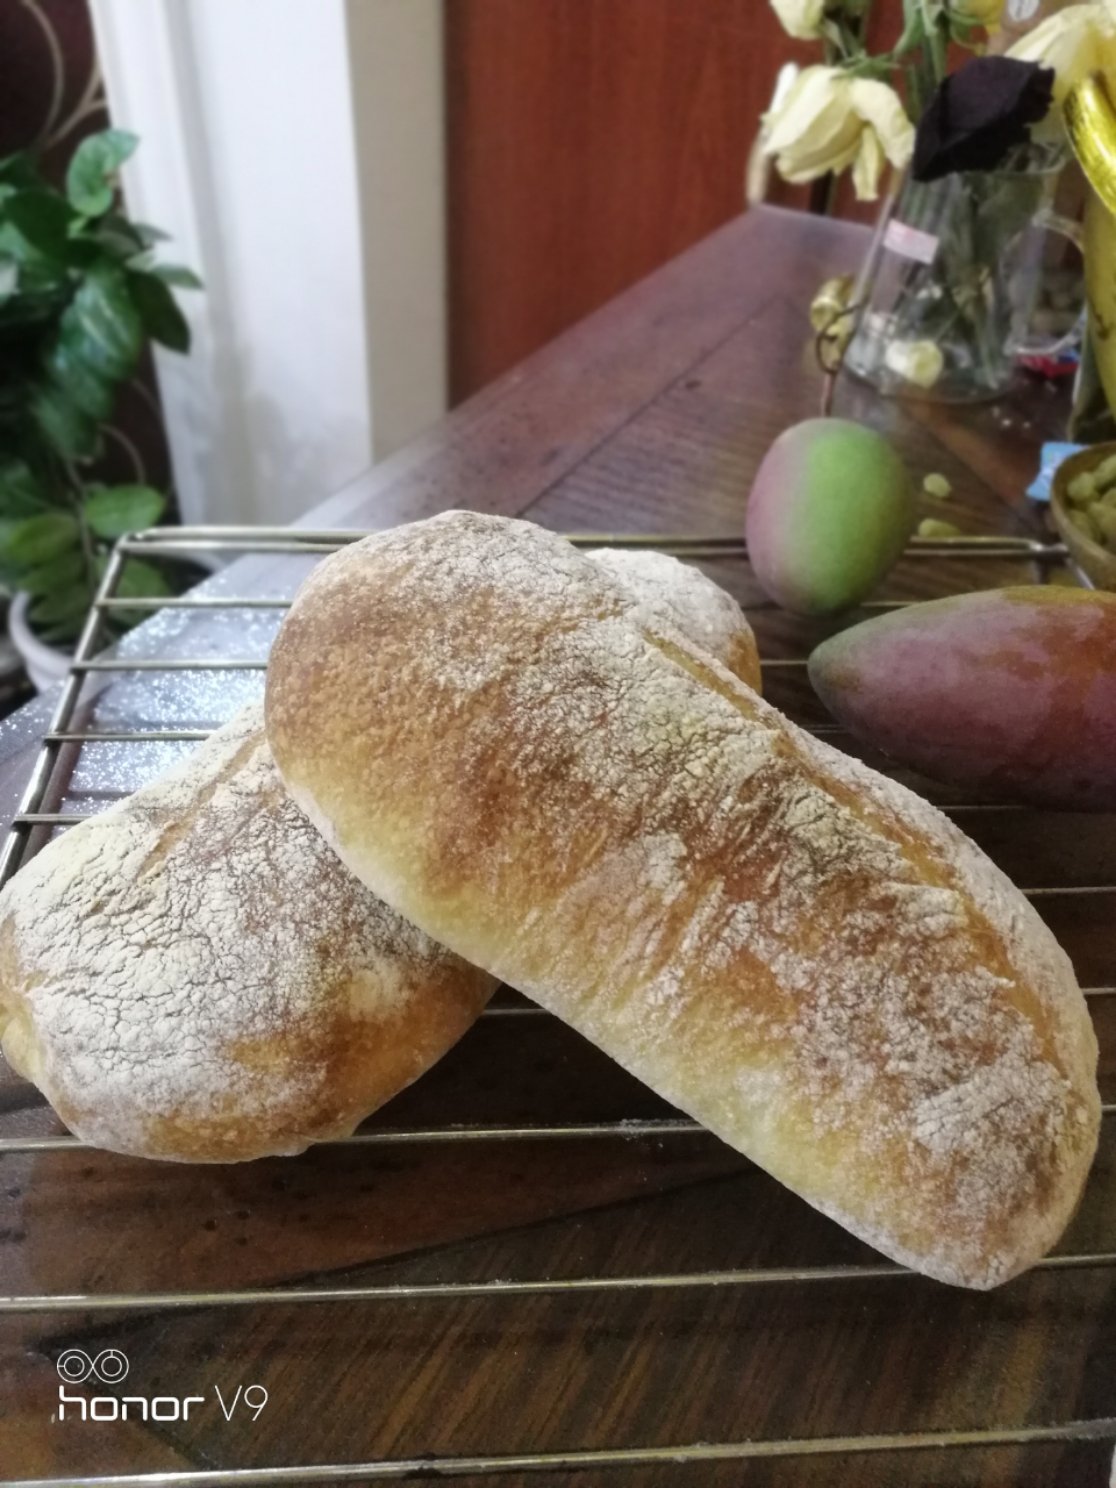 ciabatta 夏巴达/恰巴塔-意大利拖鞋面包